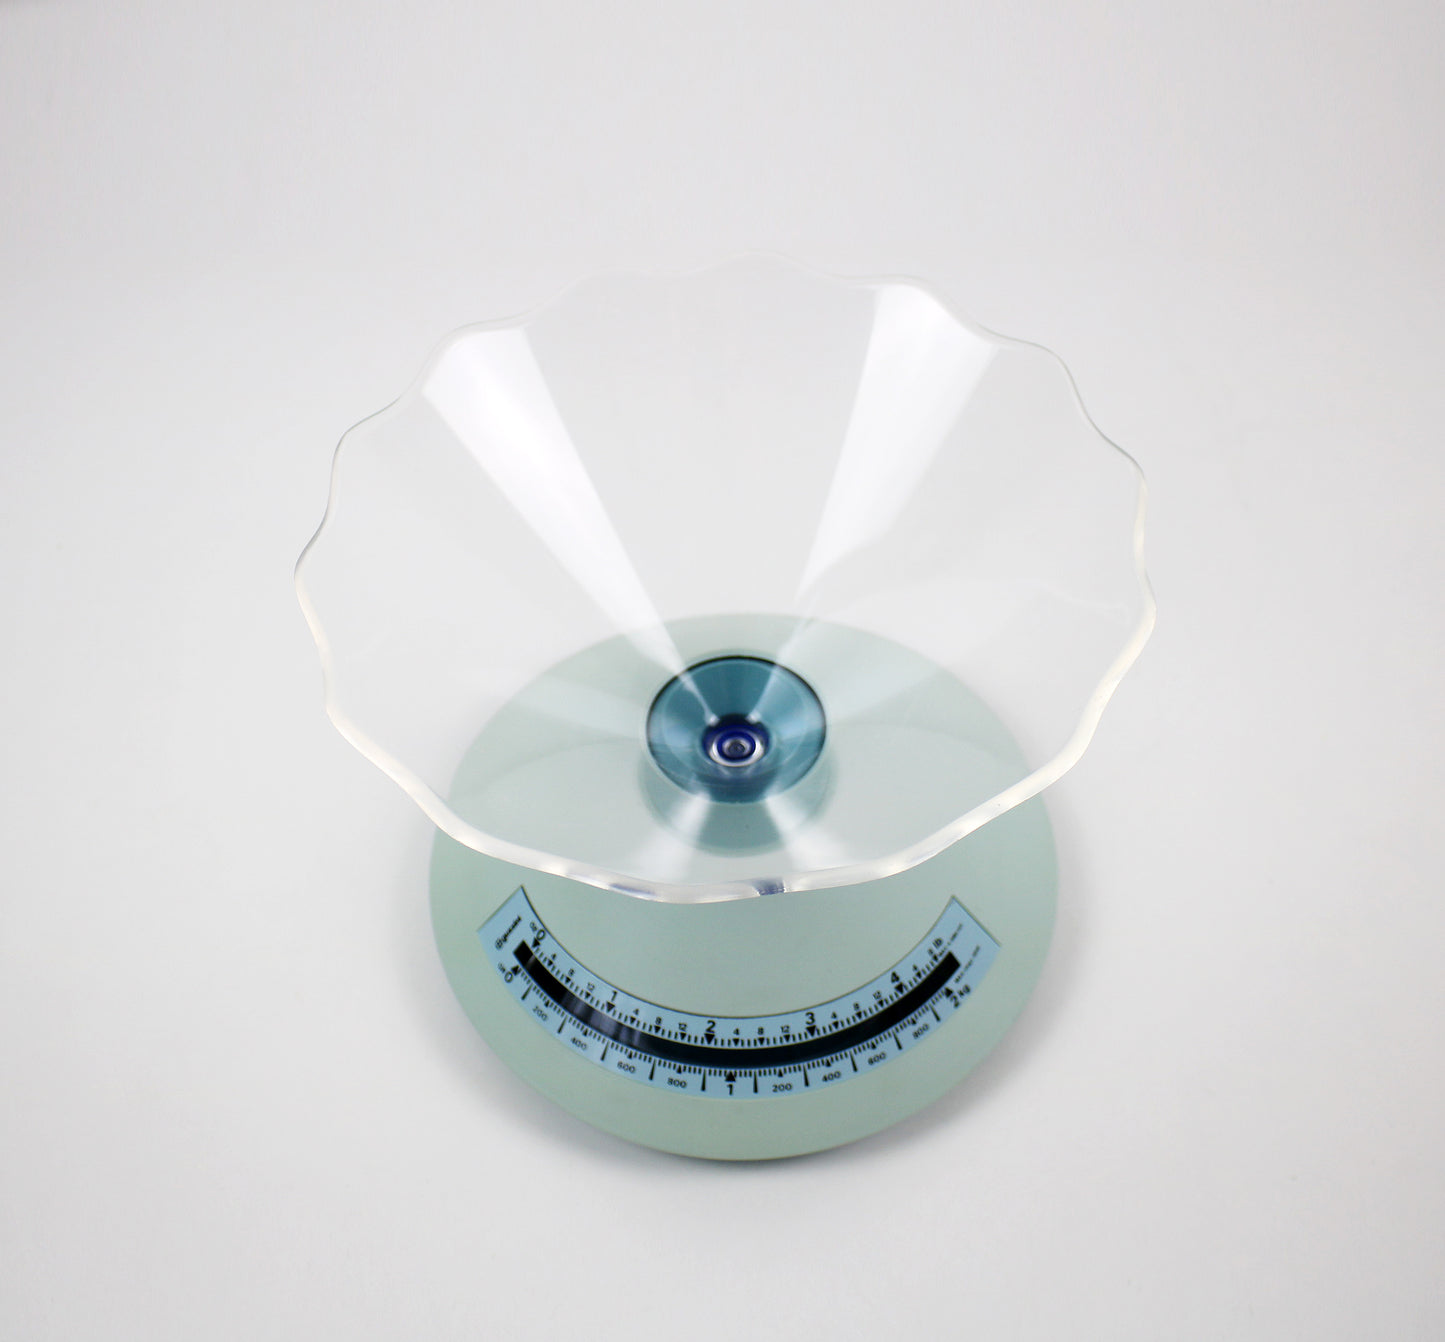 Ennio Pasini for Guzzini postmodern Dolly kitchen scales in pale blue acrylic